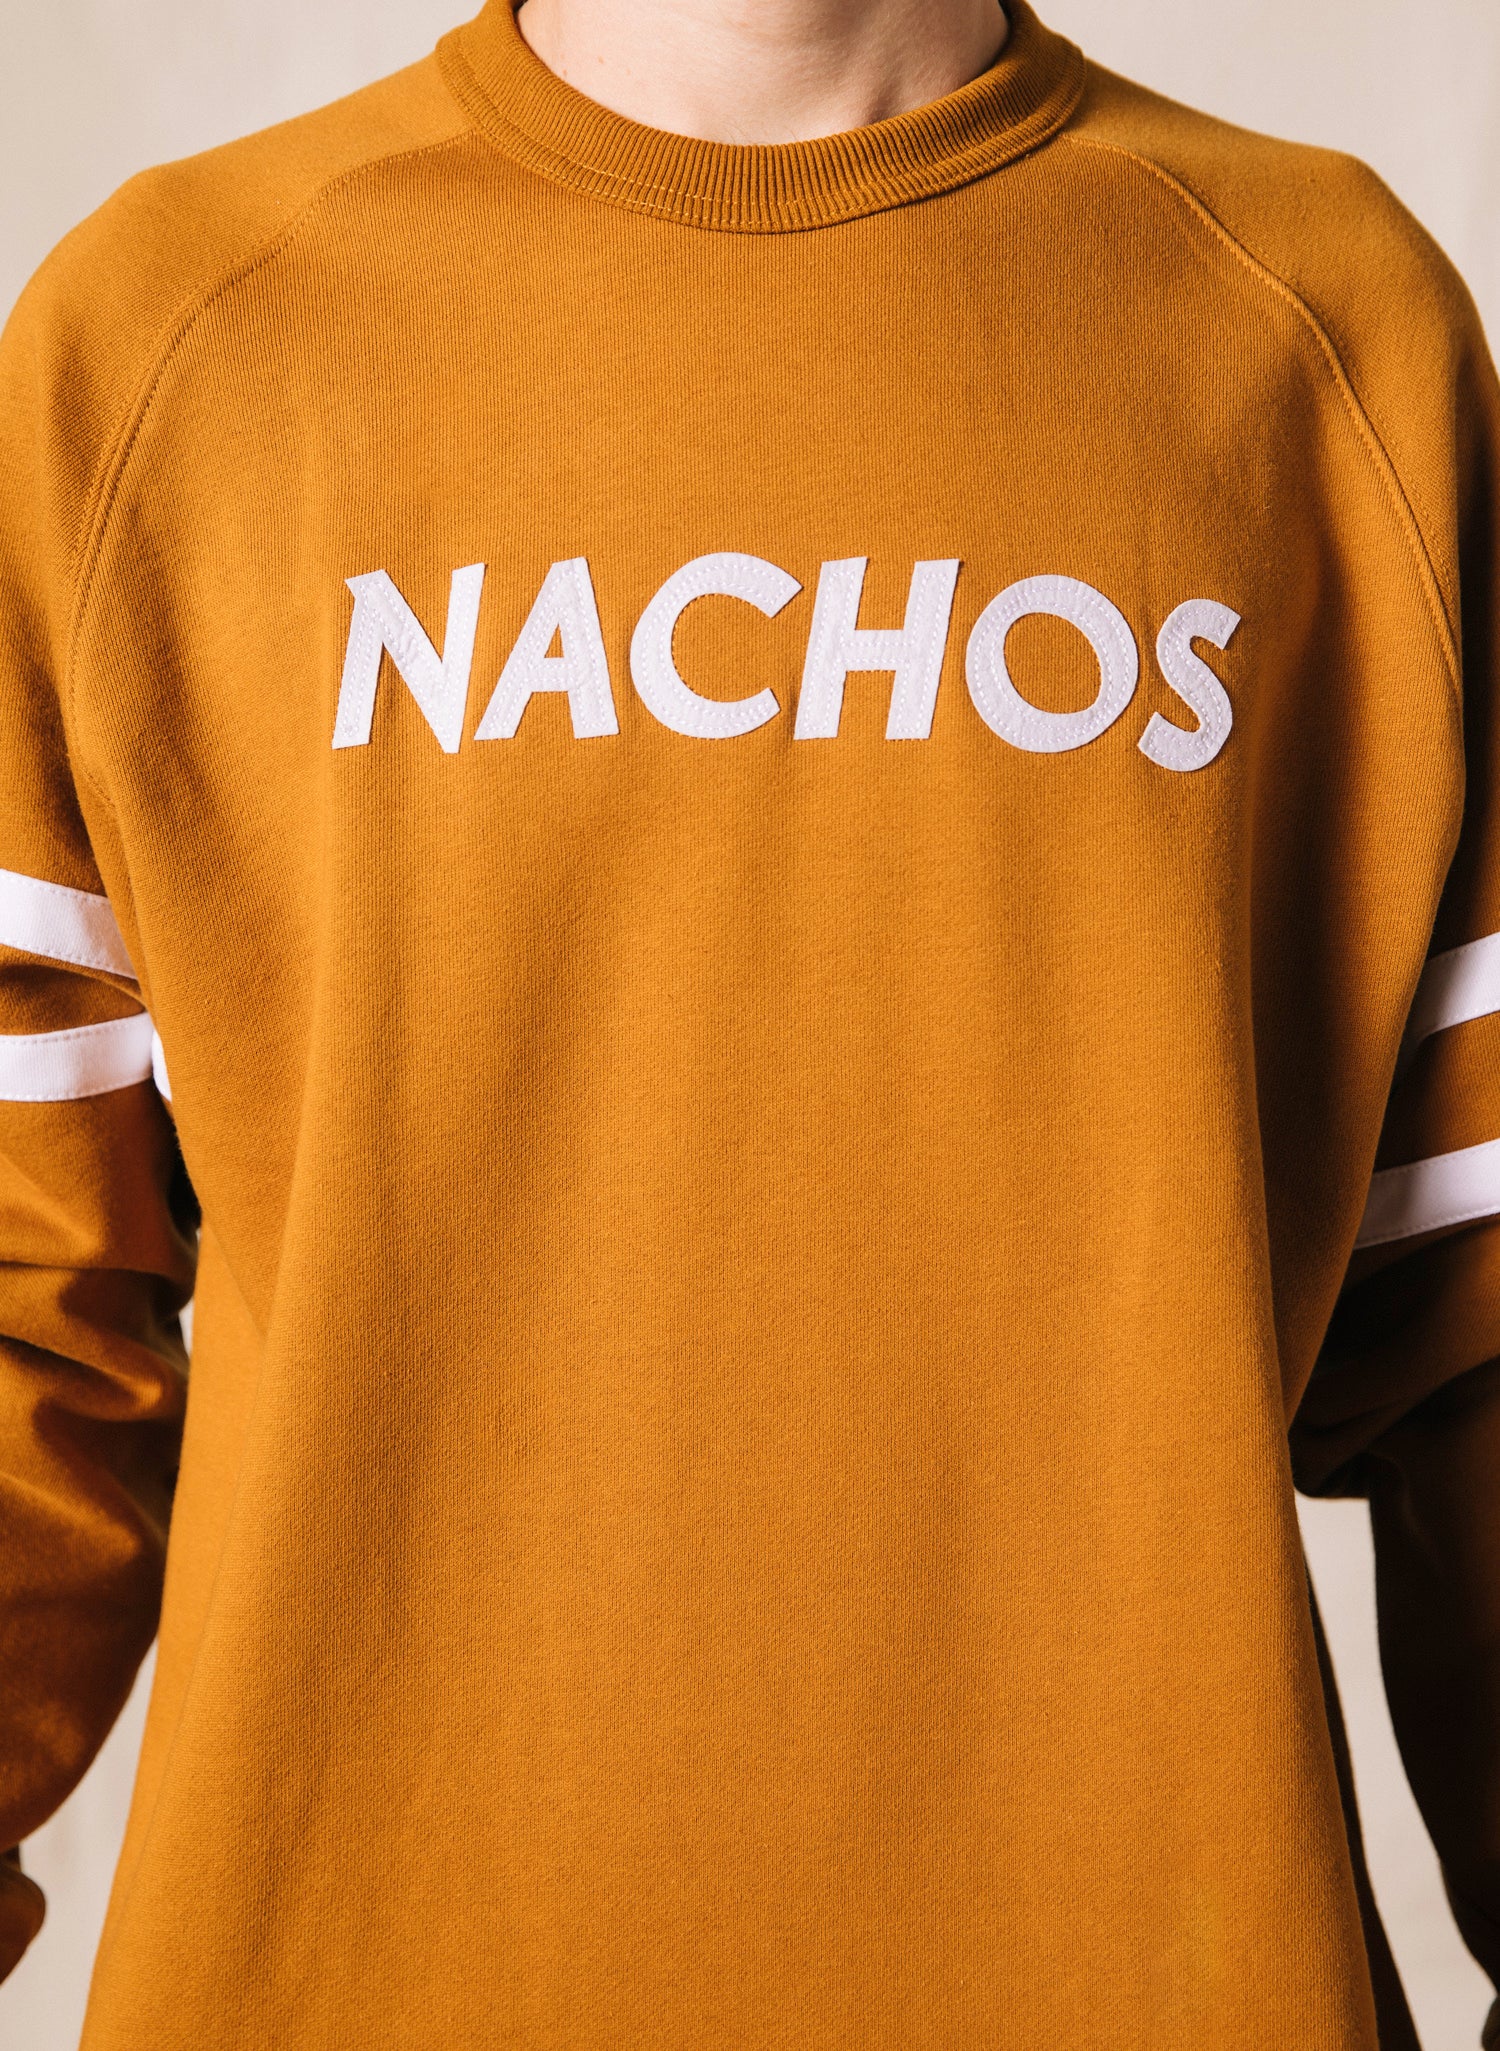 Nachos Mexican Food Snack Salsa Rust Sustainable Hemp Crewneck Sweatshirt for Foodies and Food Lovers